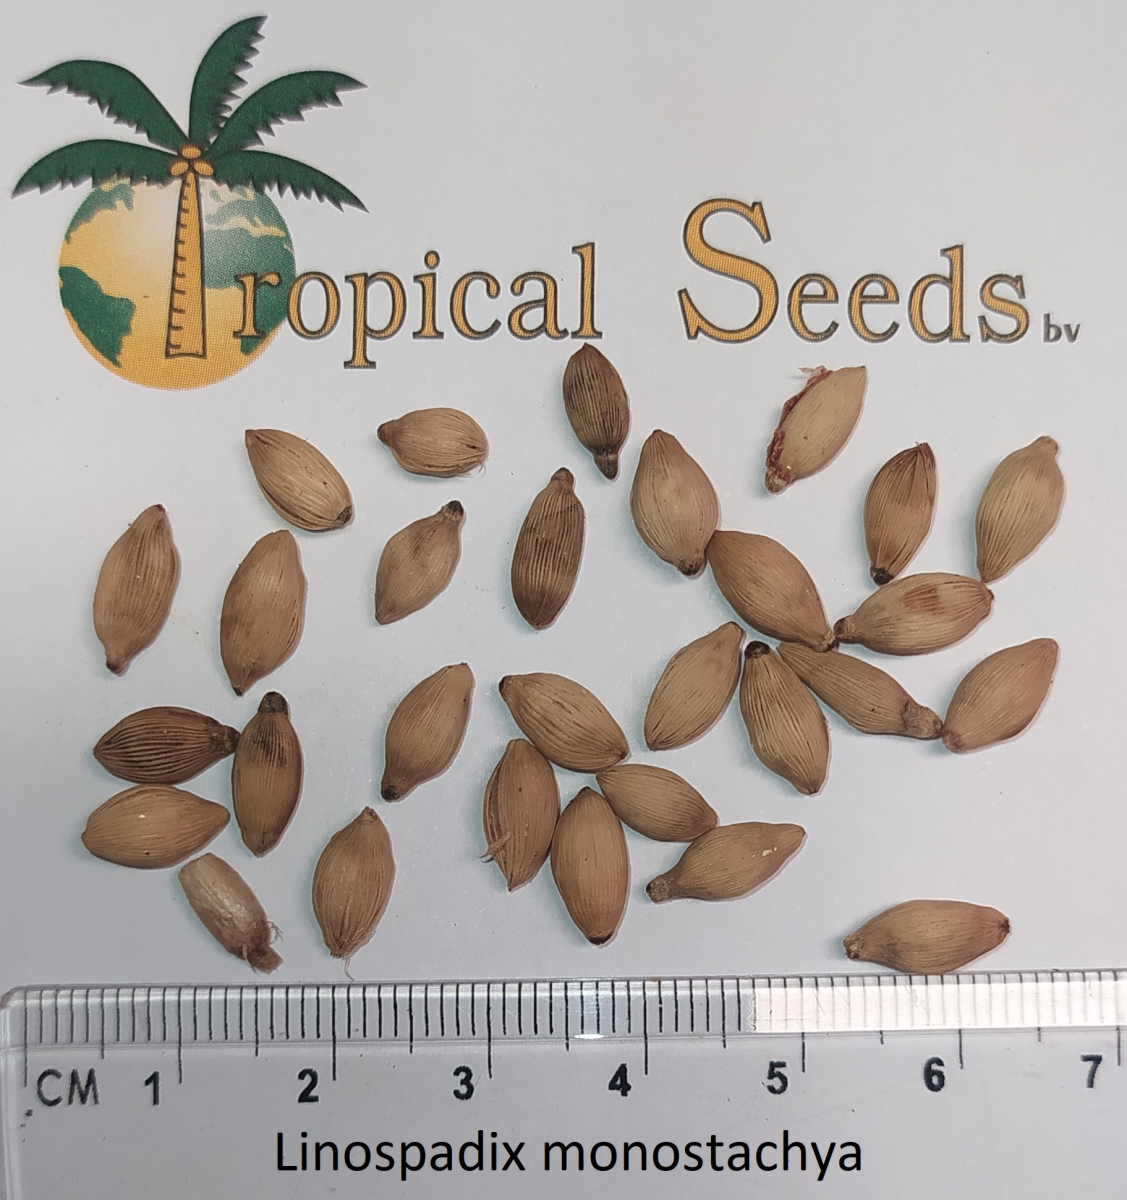 Linospadix monostachya Seeds